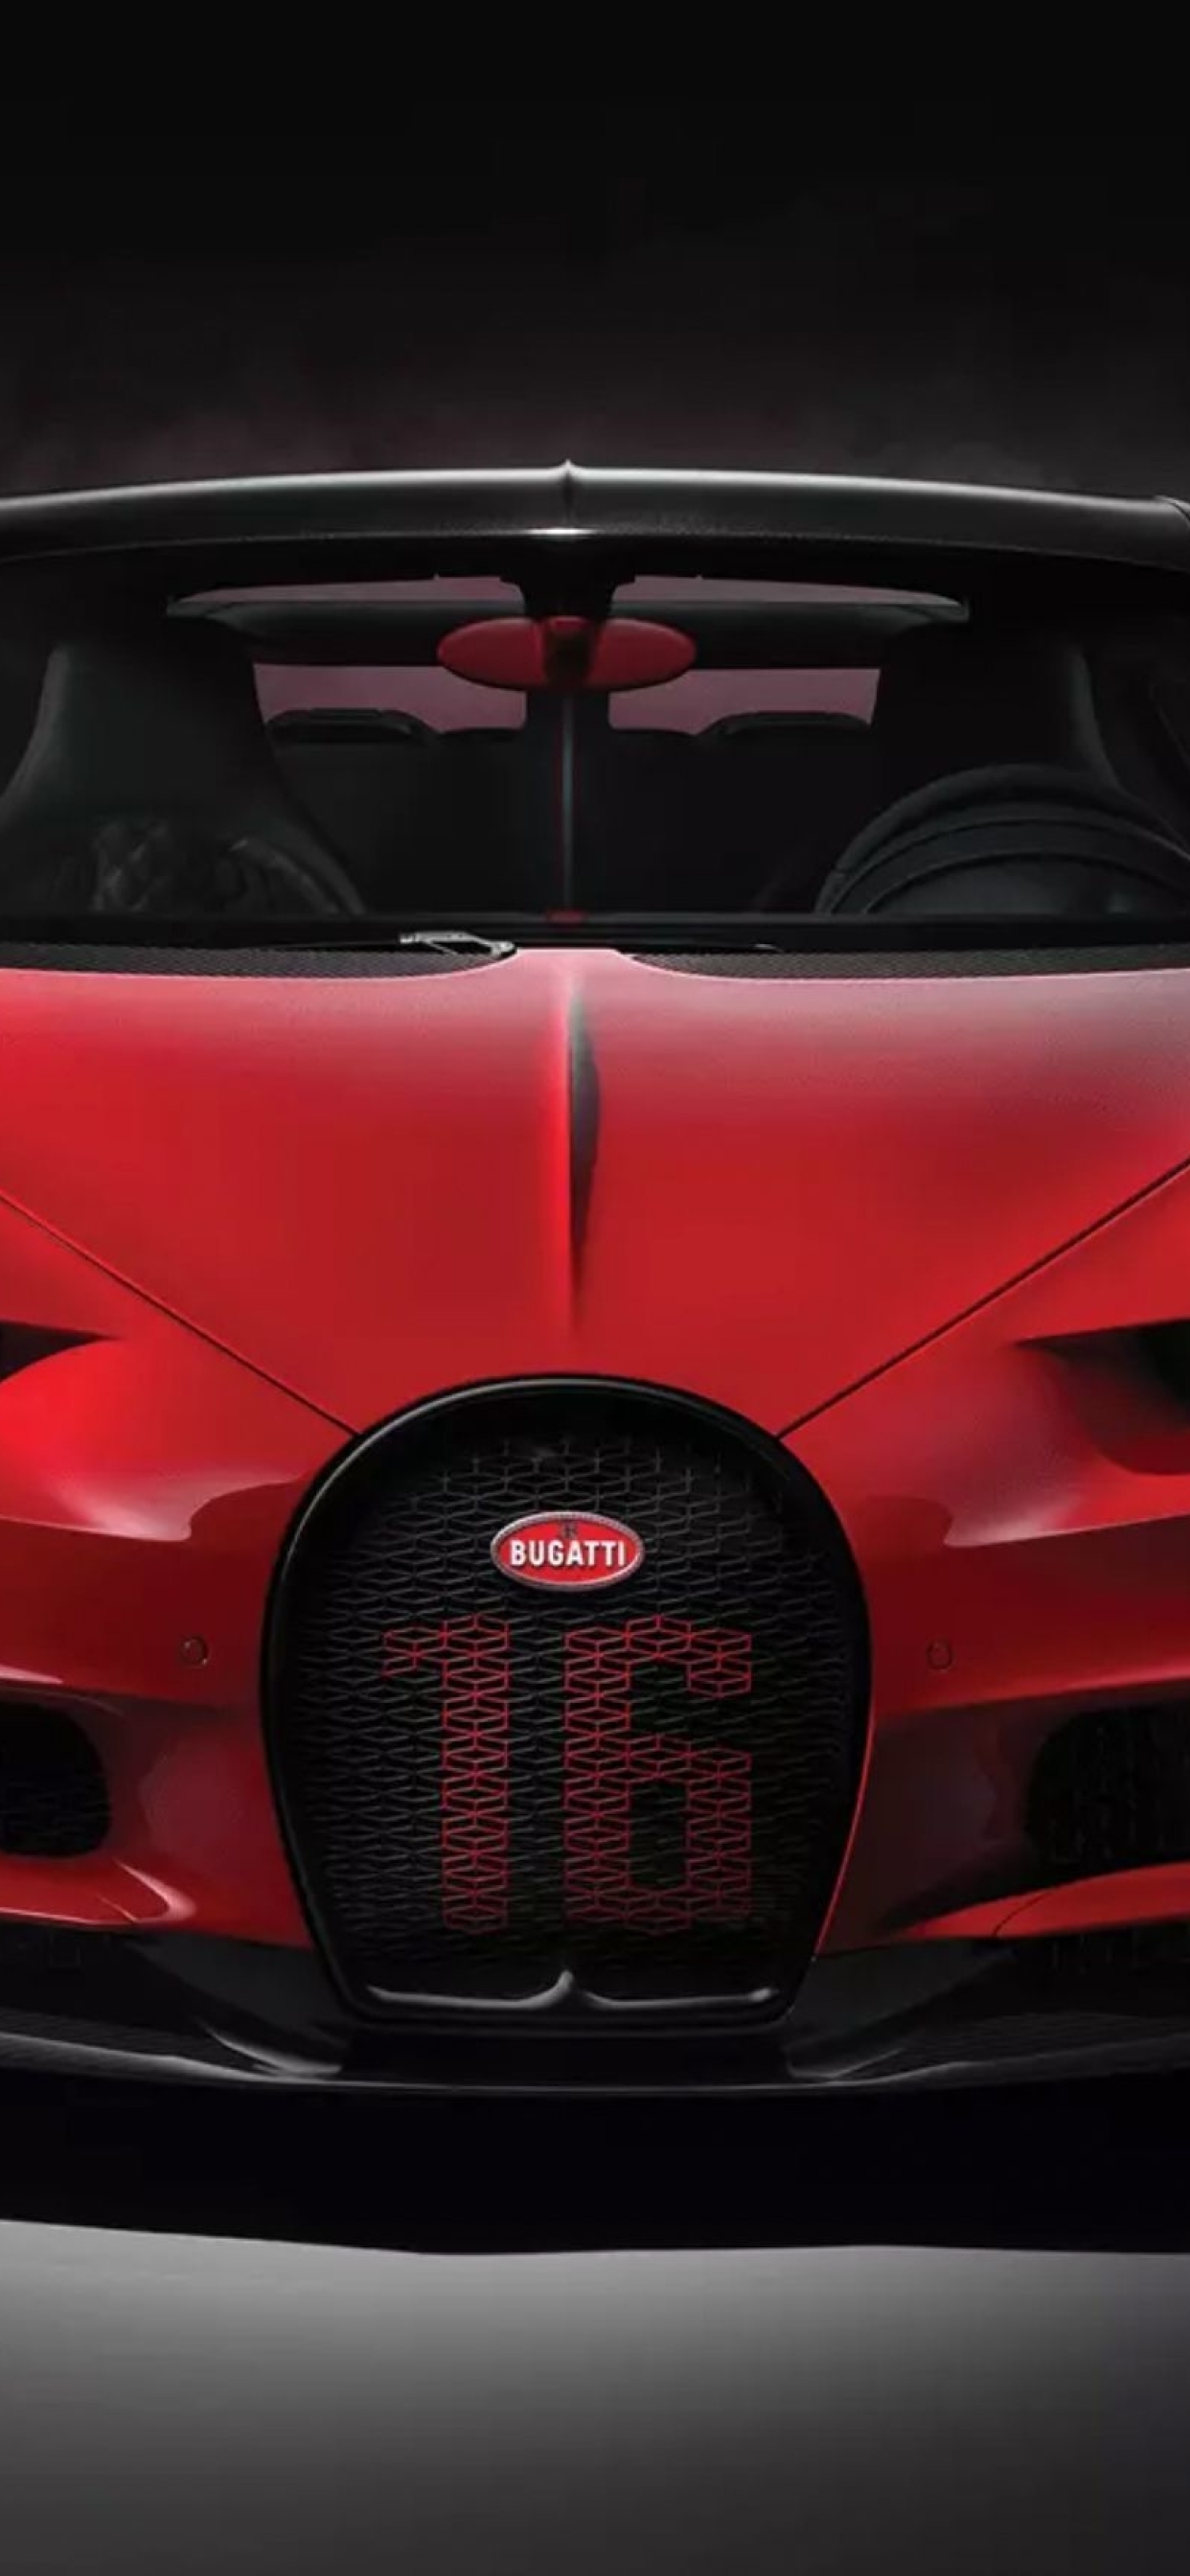 Bugatti Wallpaper Iphone